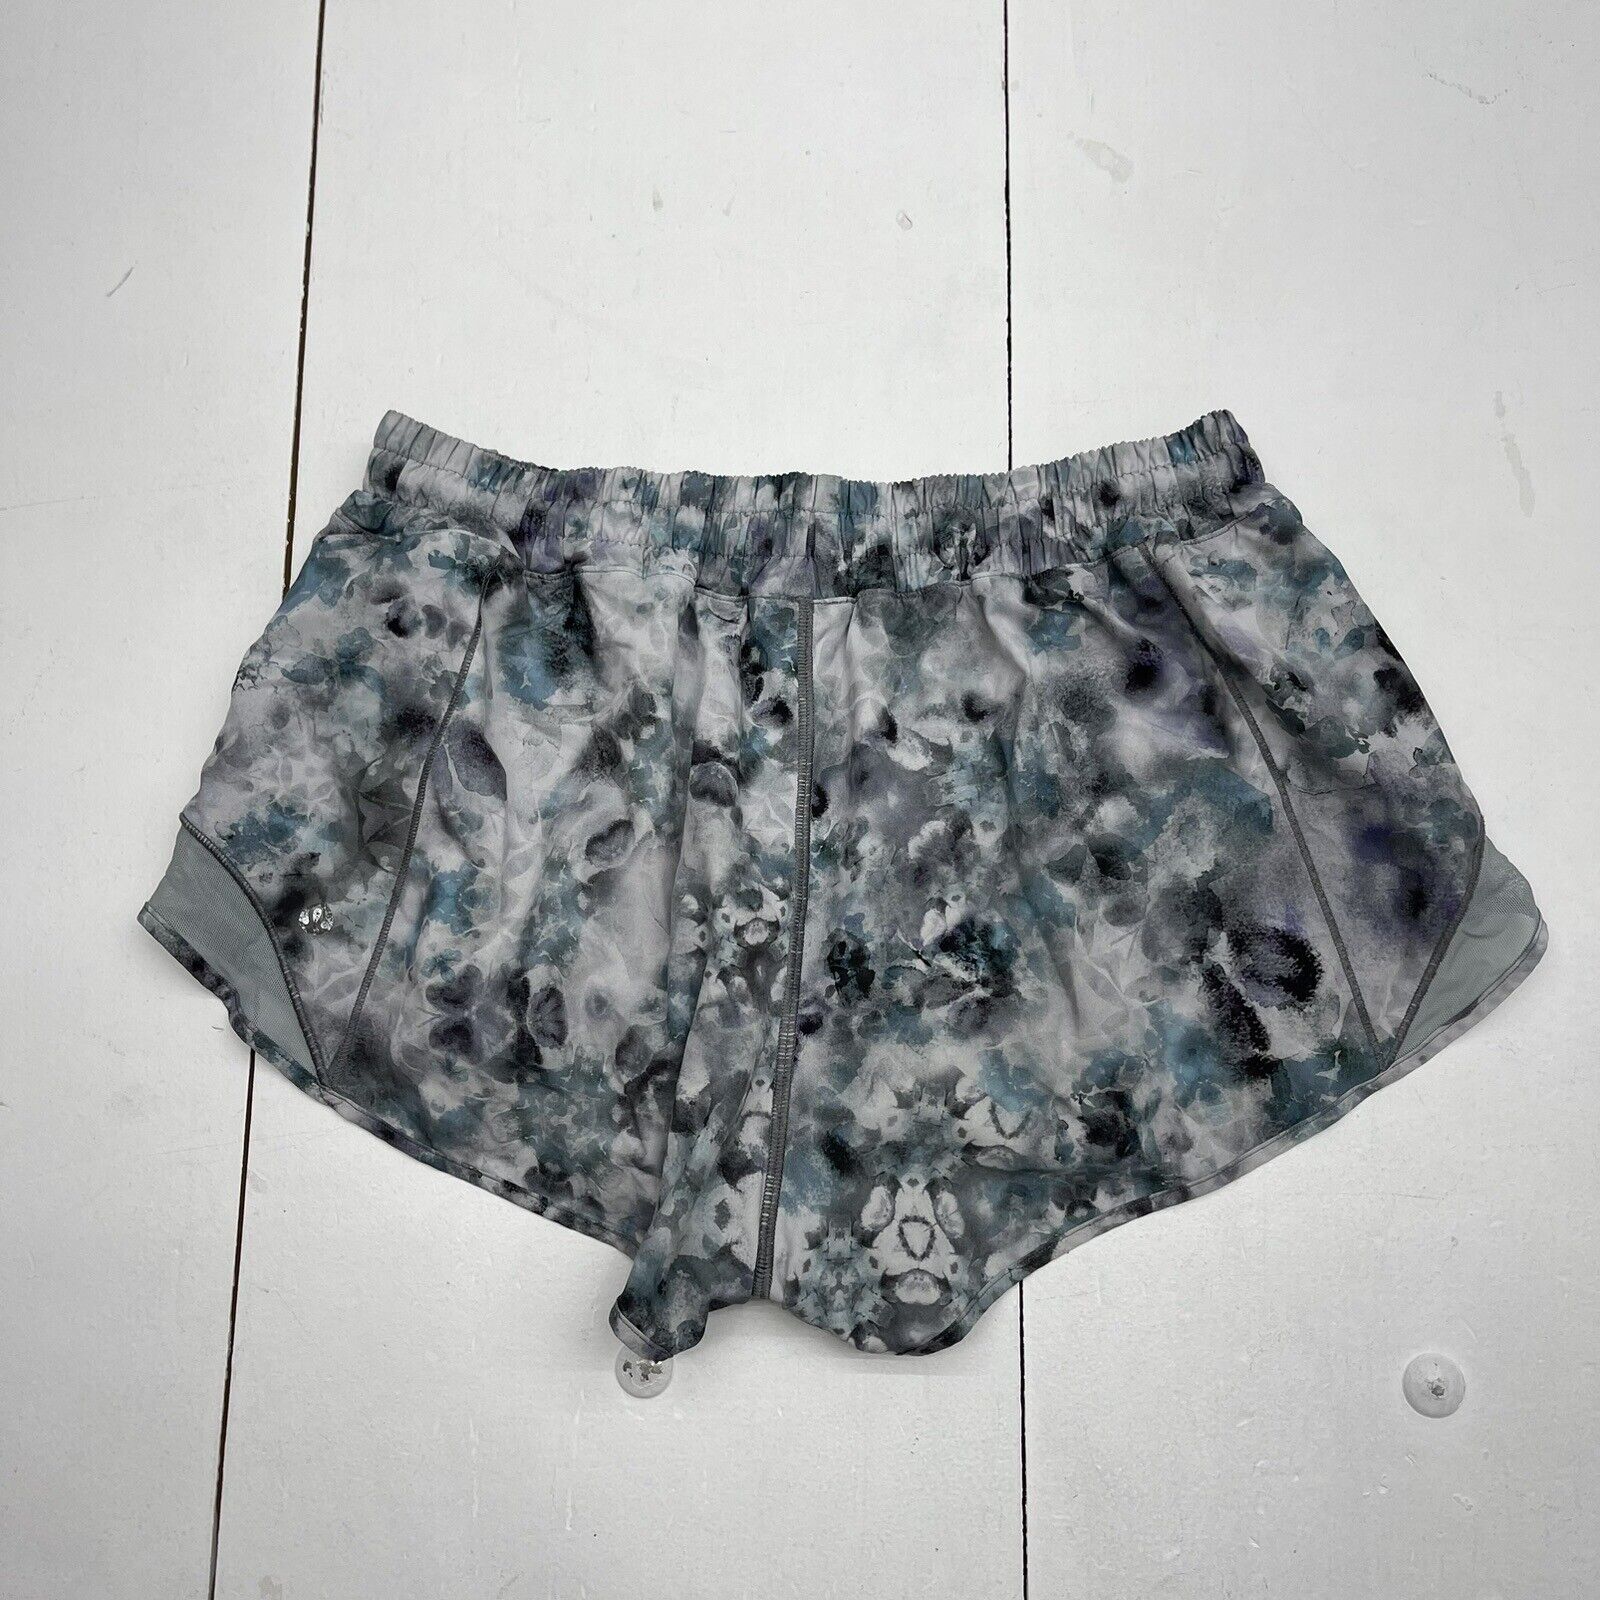 Lululemon Final Lap Navy Blue Mesh Shorts 2.5” Women's Size 4